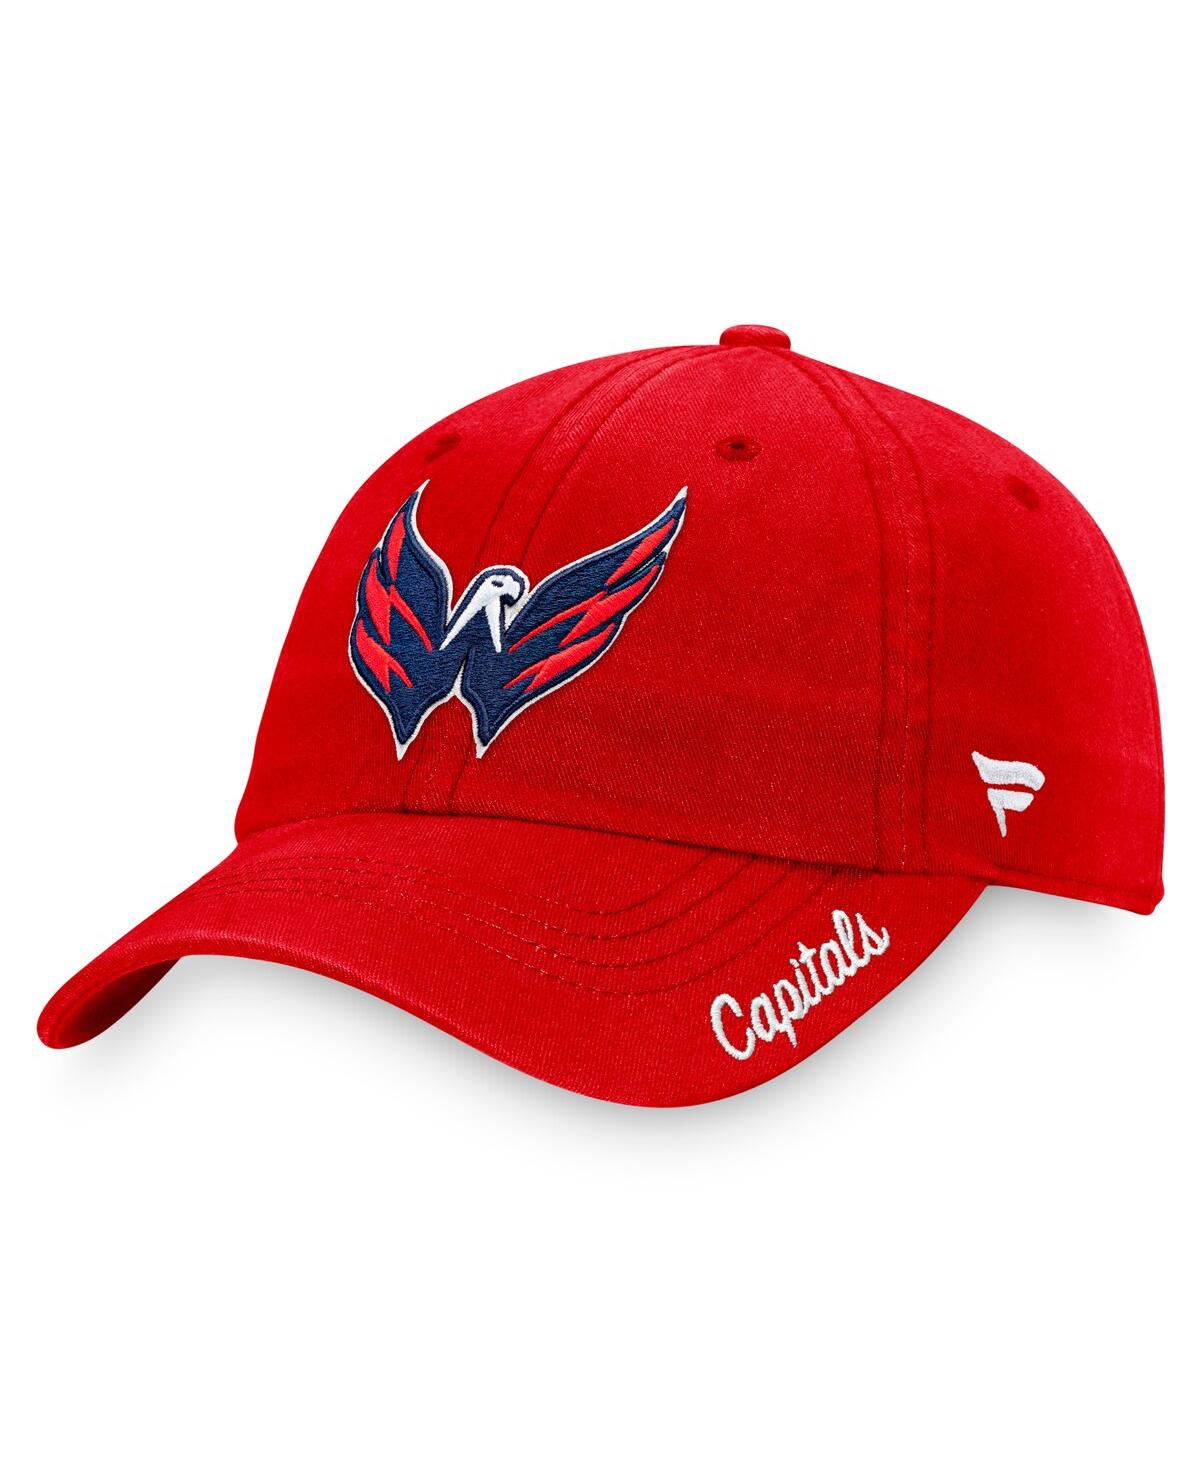 Women's Fanatics Red Washington Capitals Primary Logo Adjustable Hat - Red